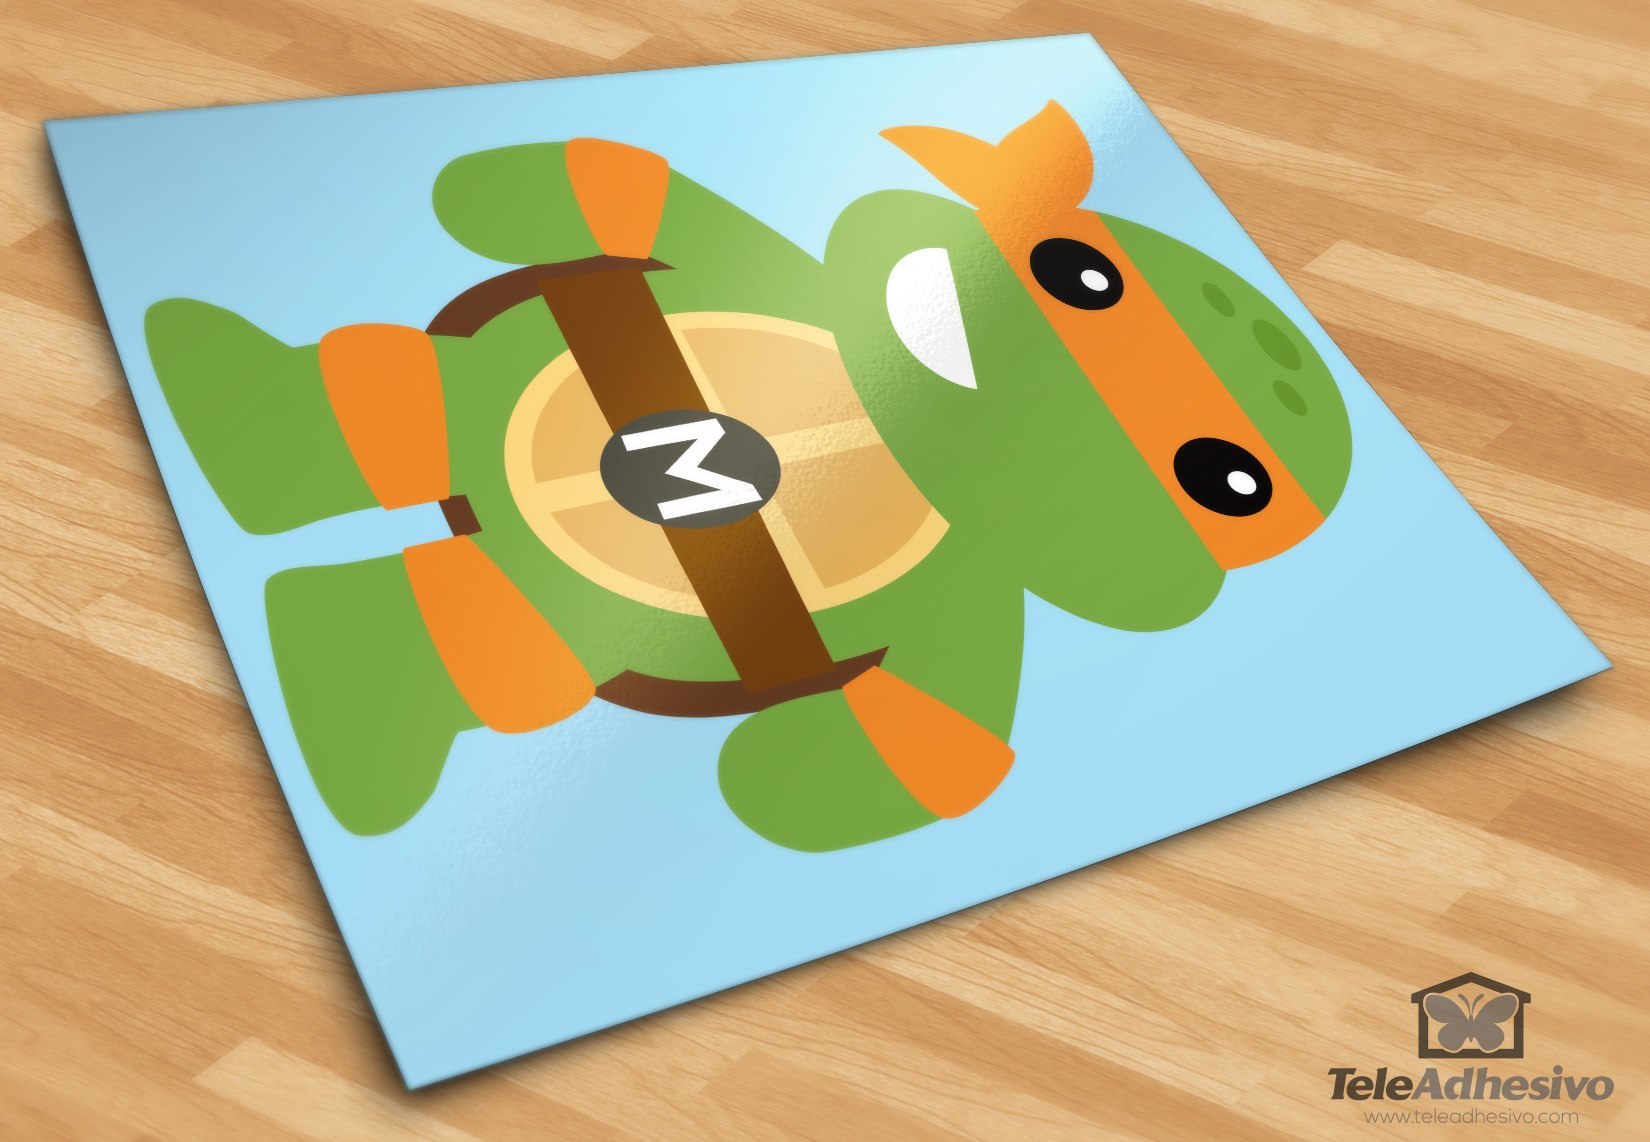 Stickers for Kids: Michelangelo Ninja Turtle